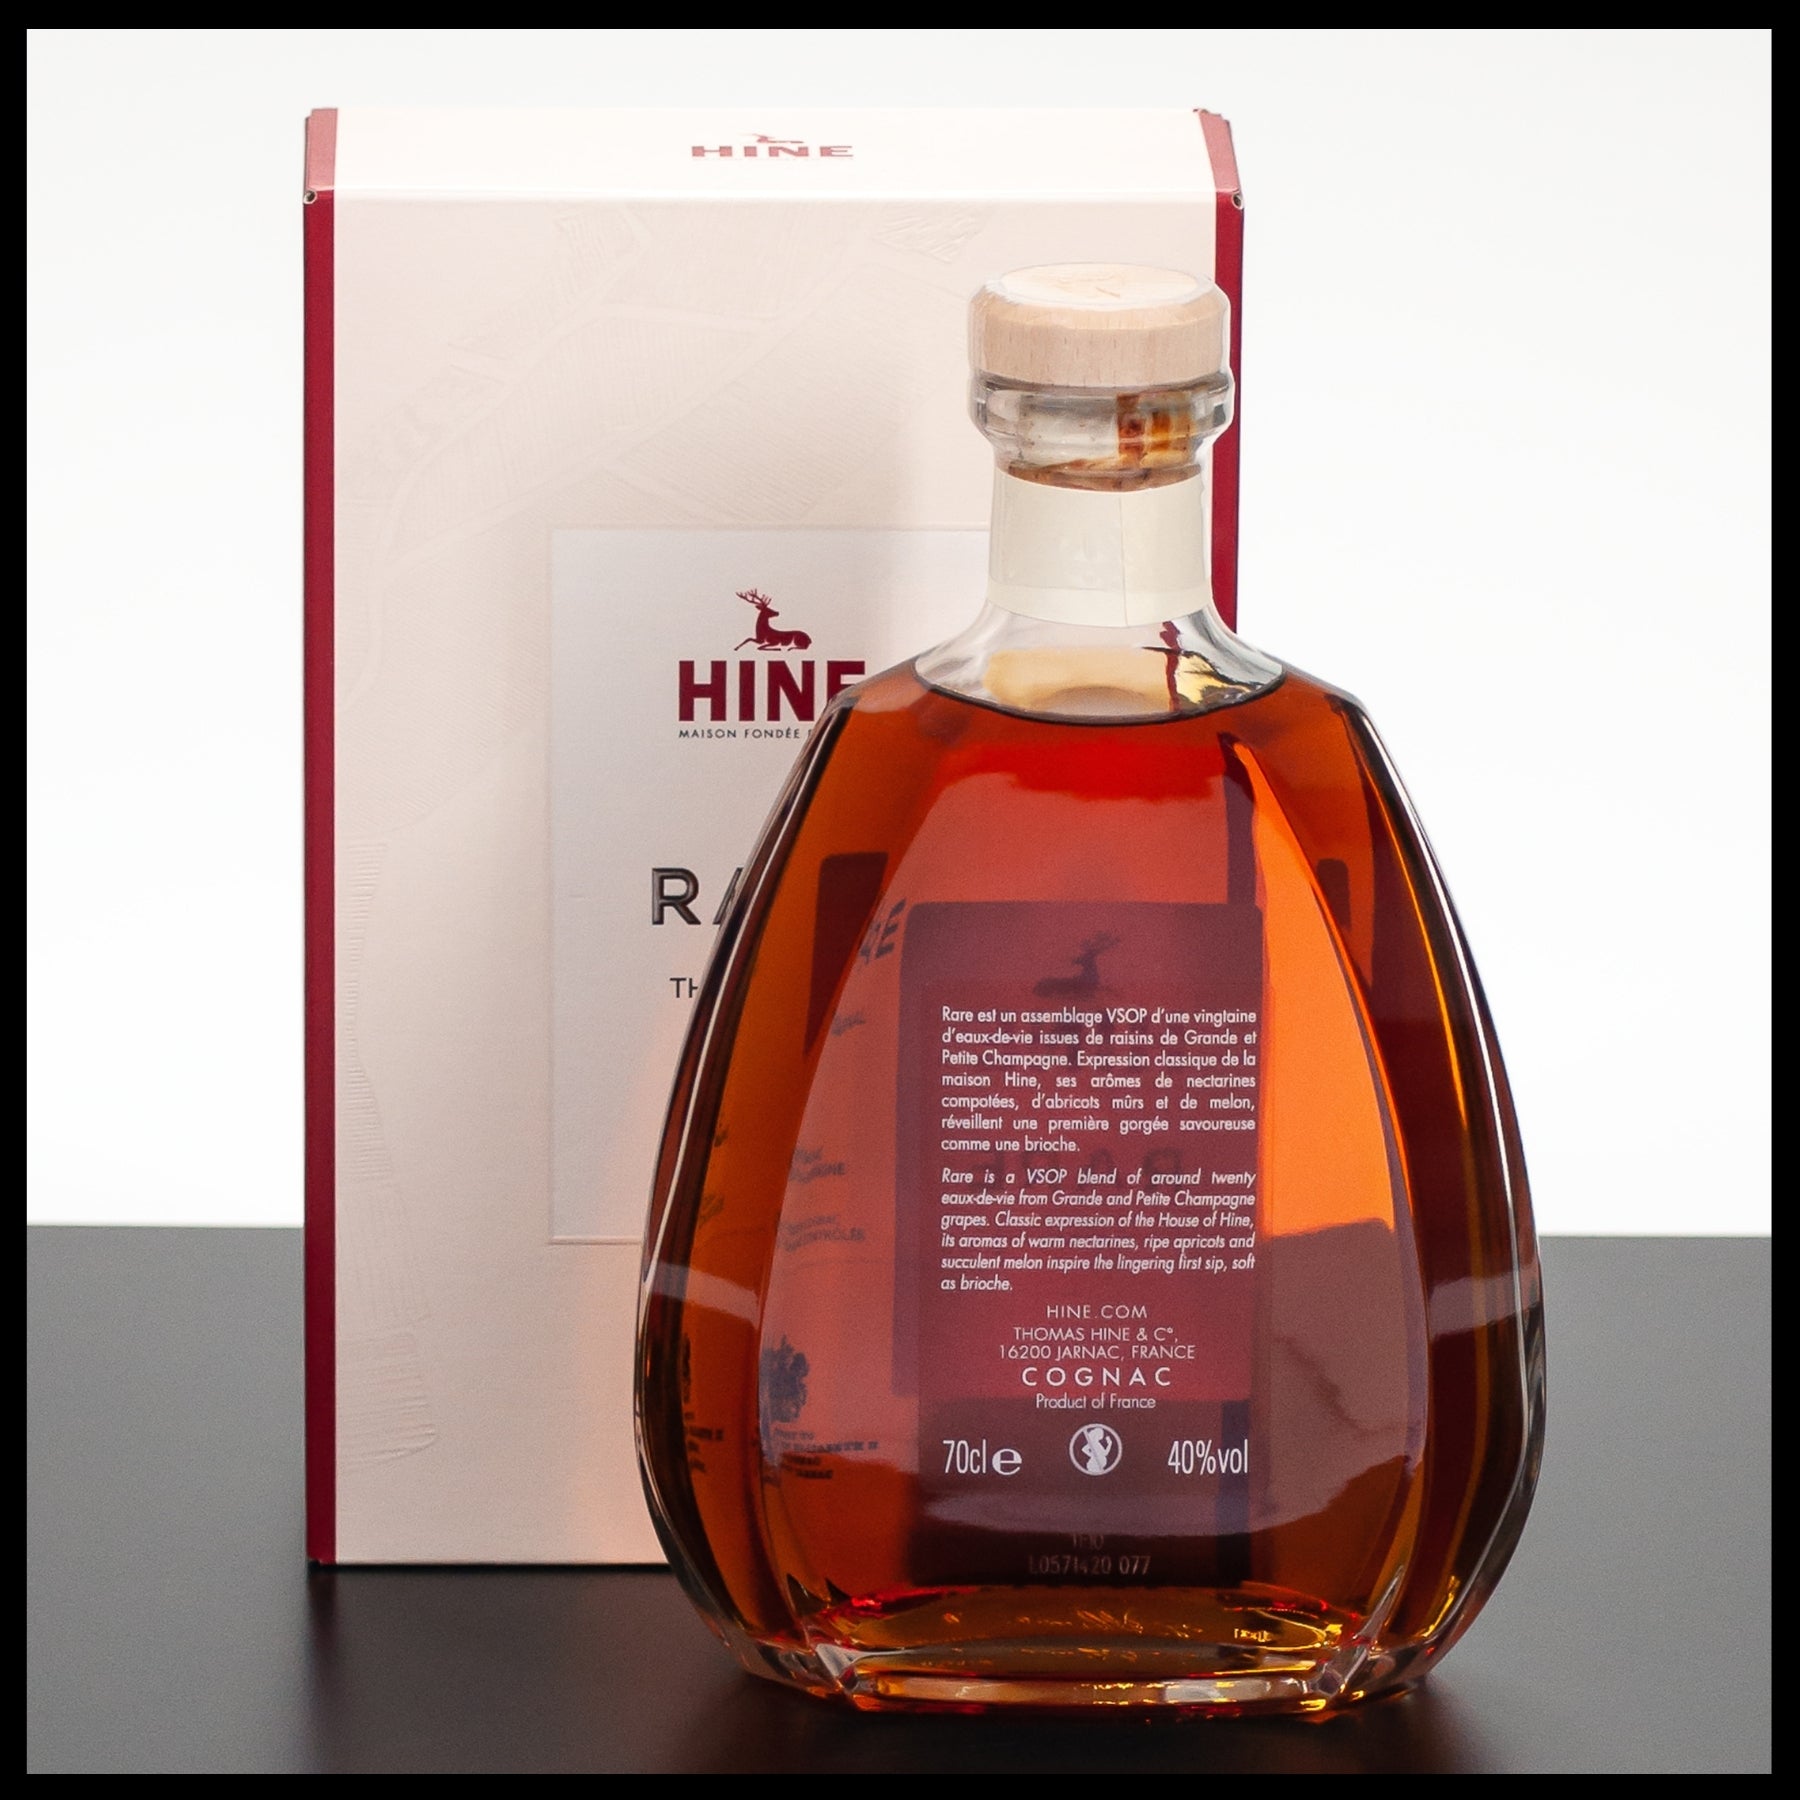 Hine Rare VSOP The Original Cognac 0,7L - 40% Vol. - Trinklusiv